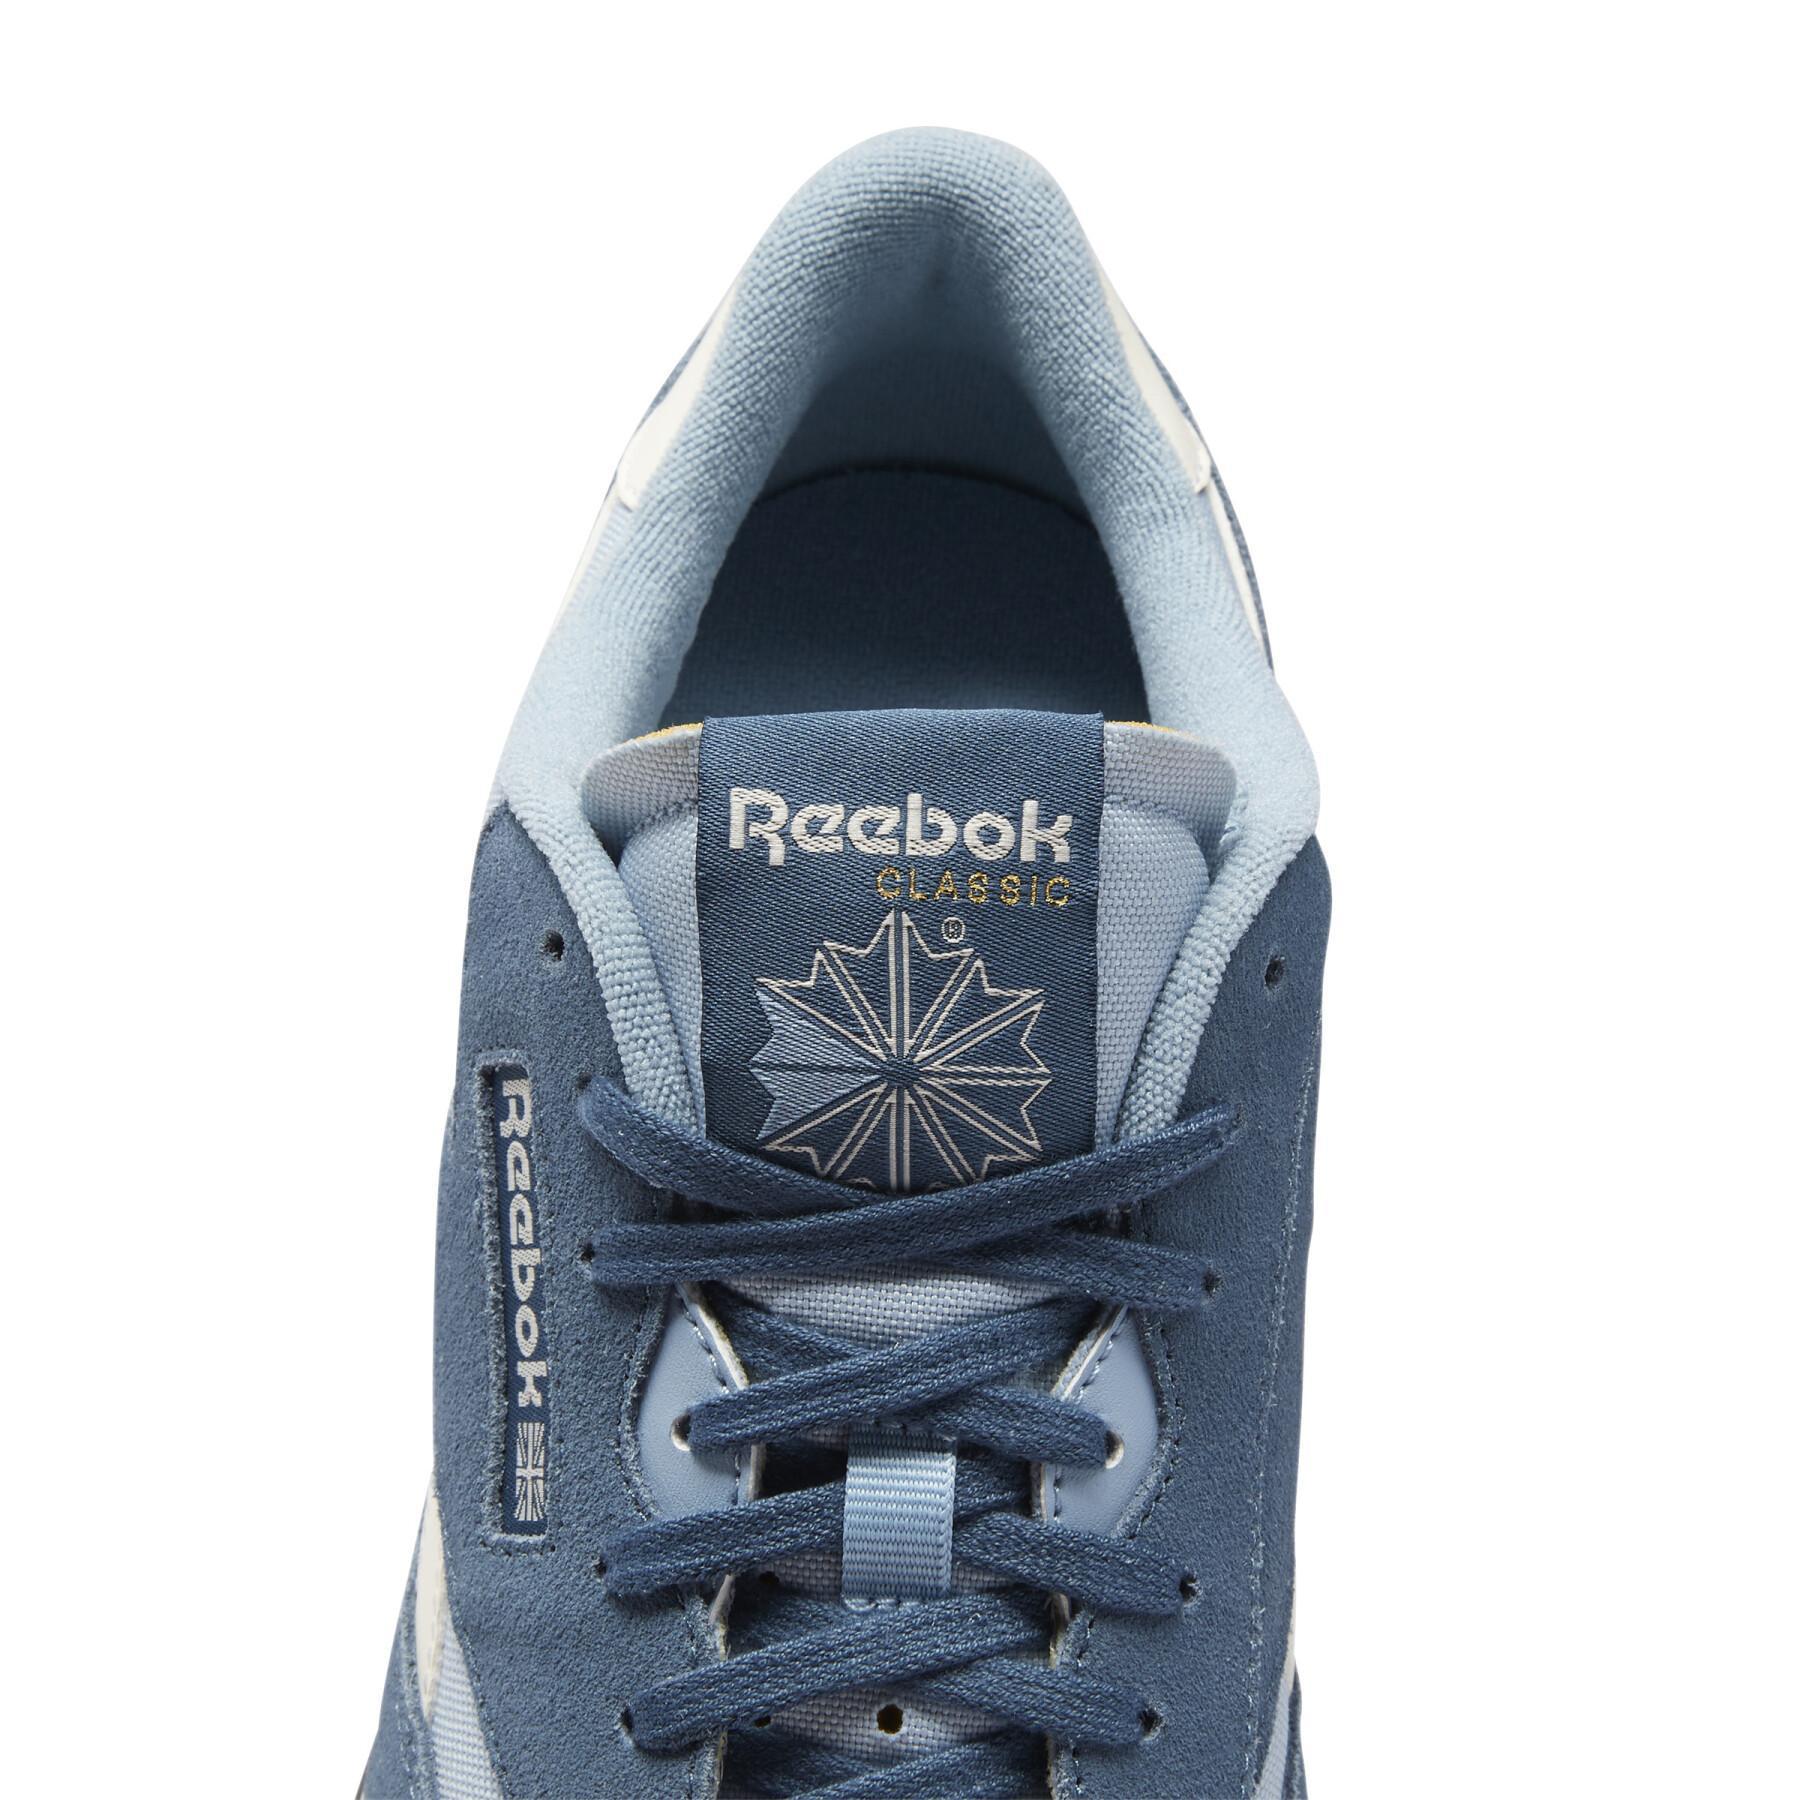 Schuhe Reebok Classics Nylon